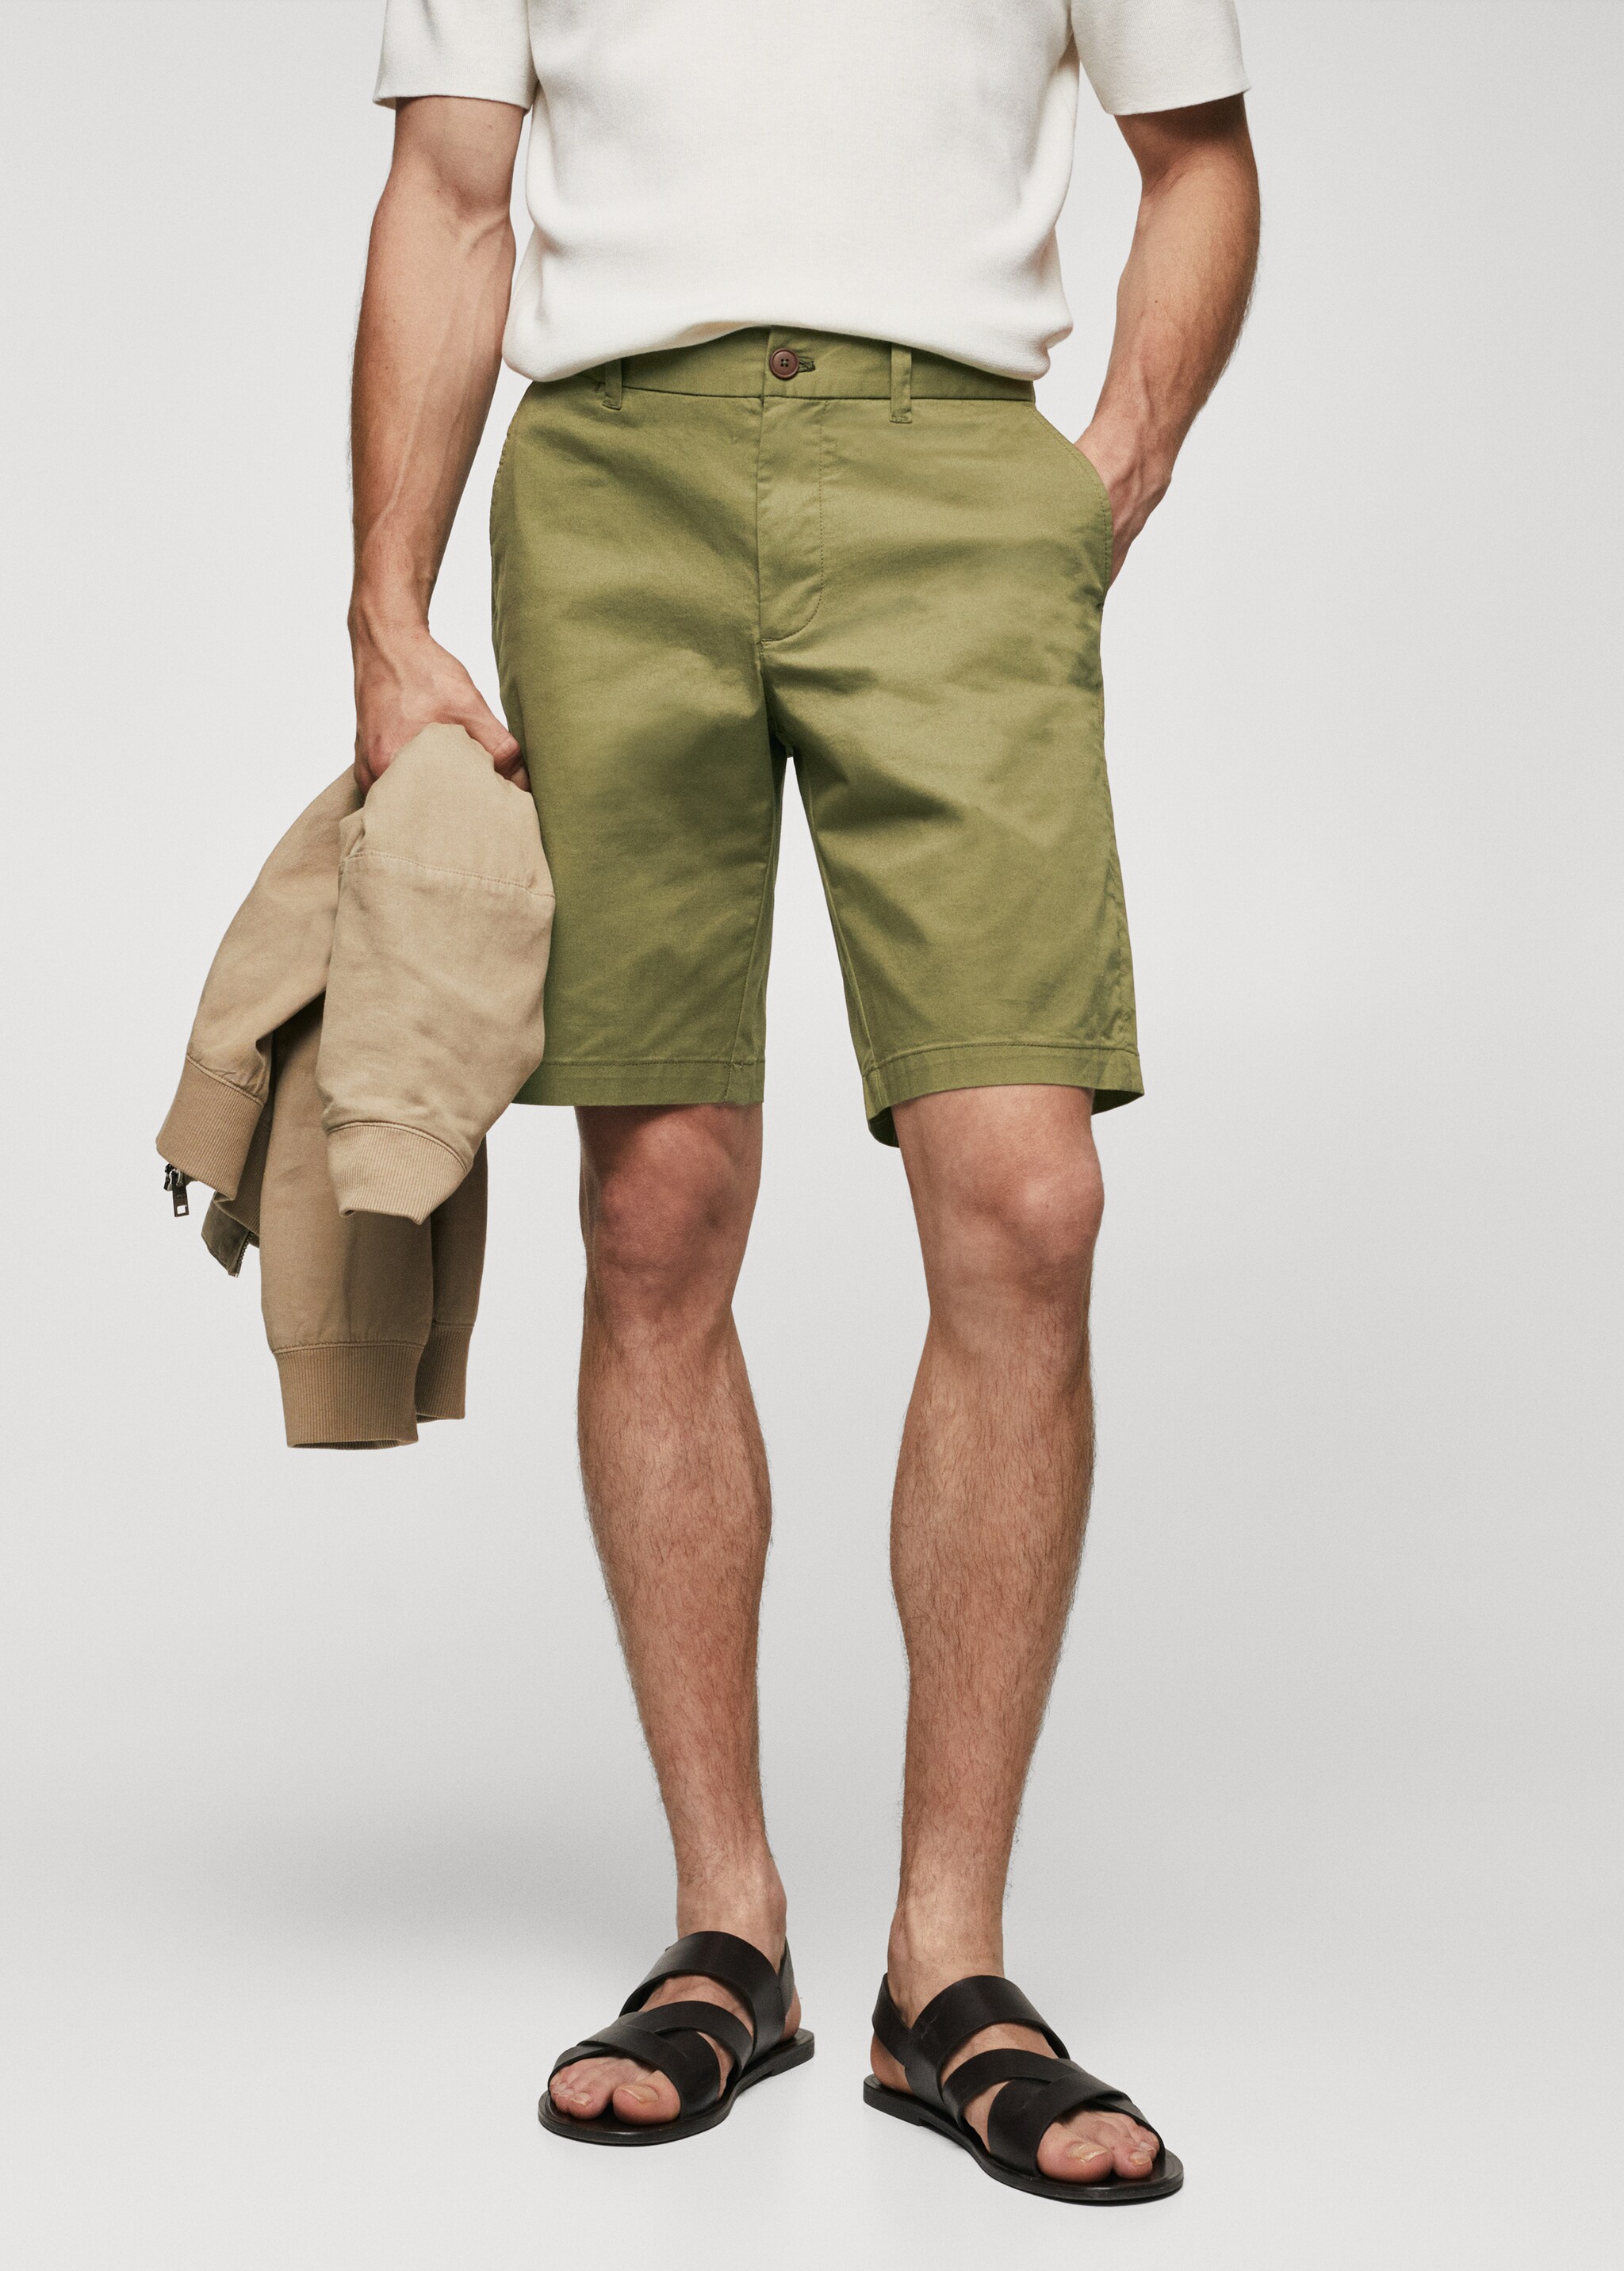 Slim fit chino cotton Bermuda shorts - Plan mediu